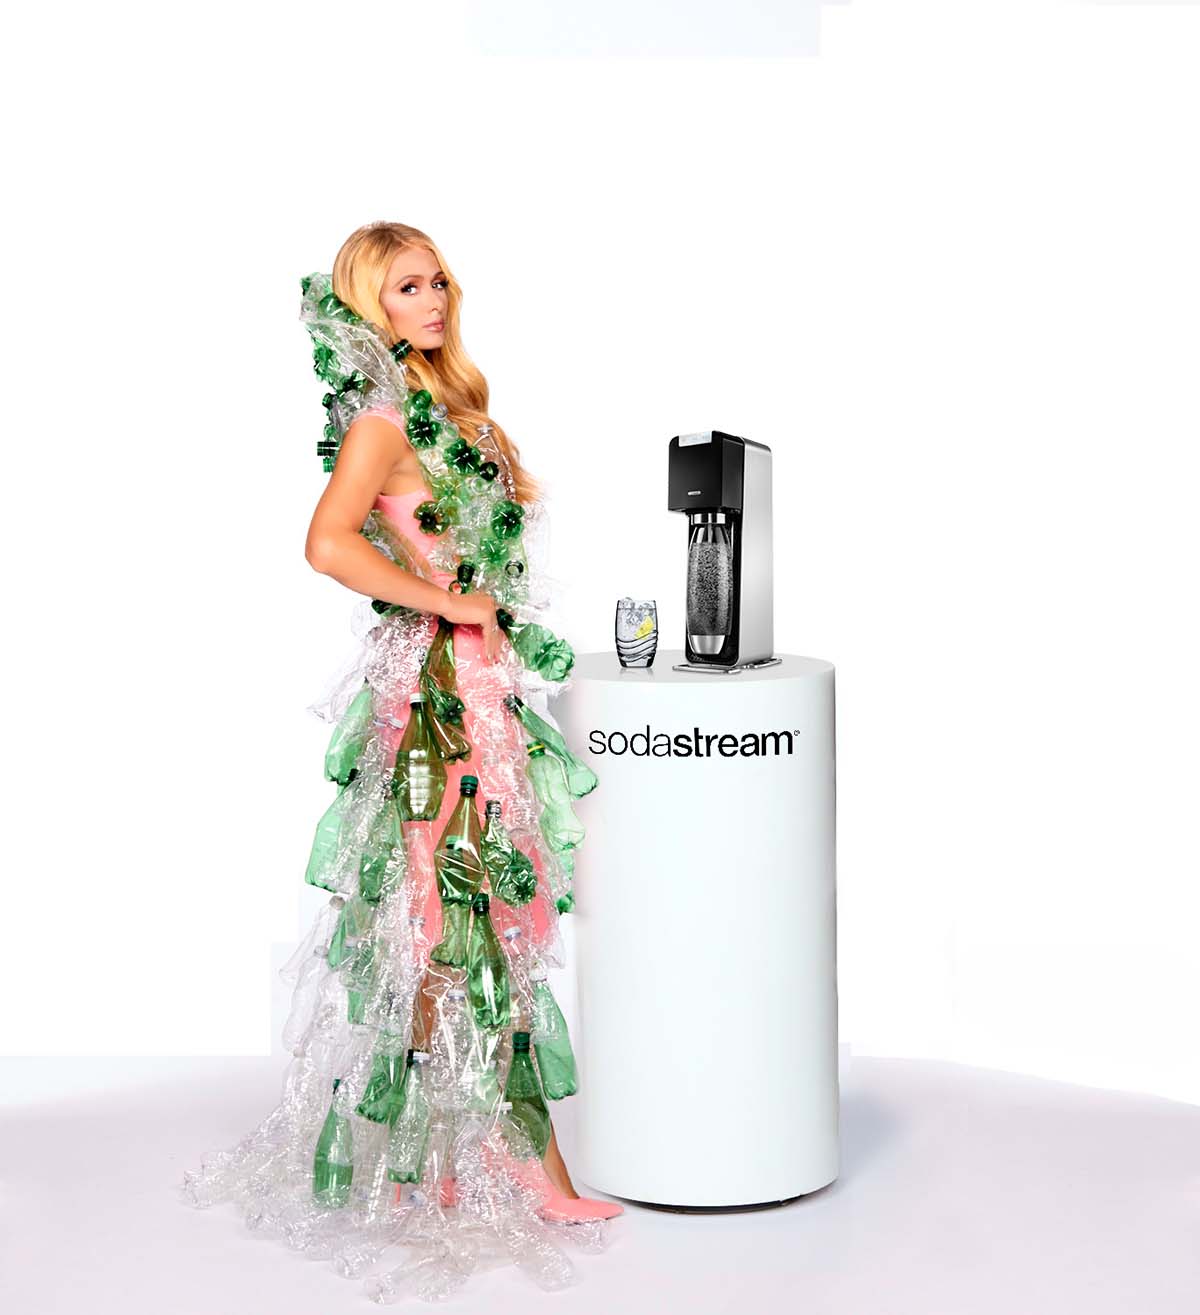 SodaStream enthüllt Aprilscherz mit Paris Hilton